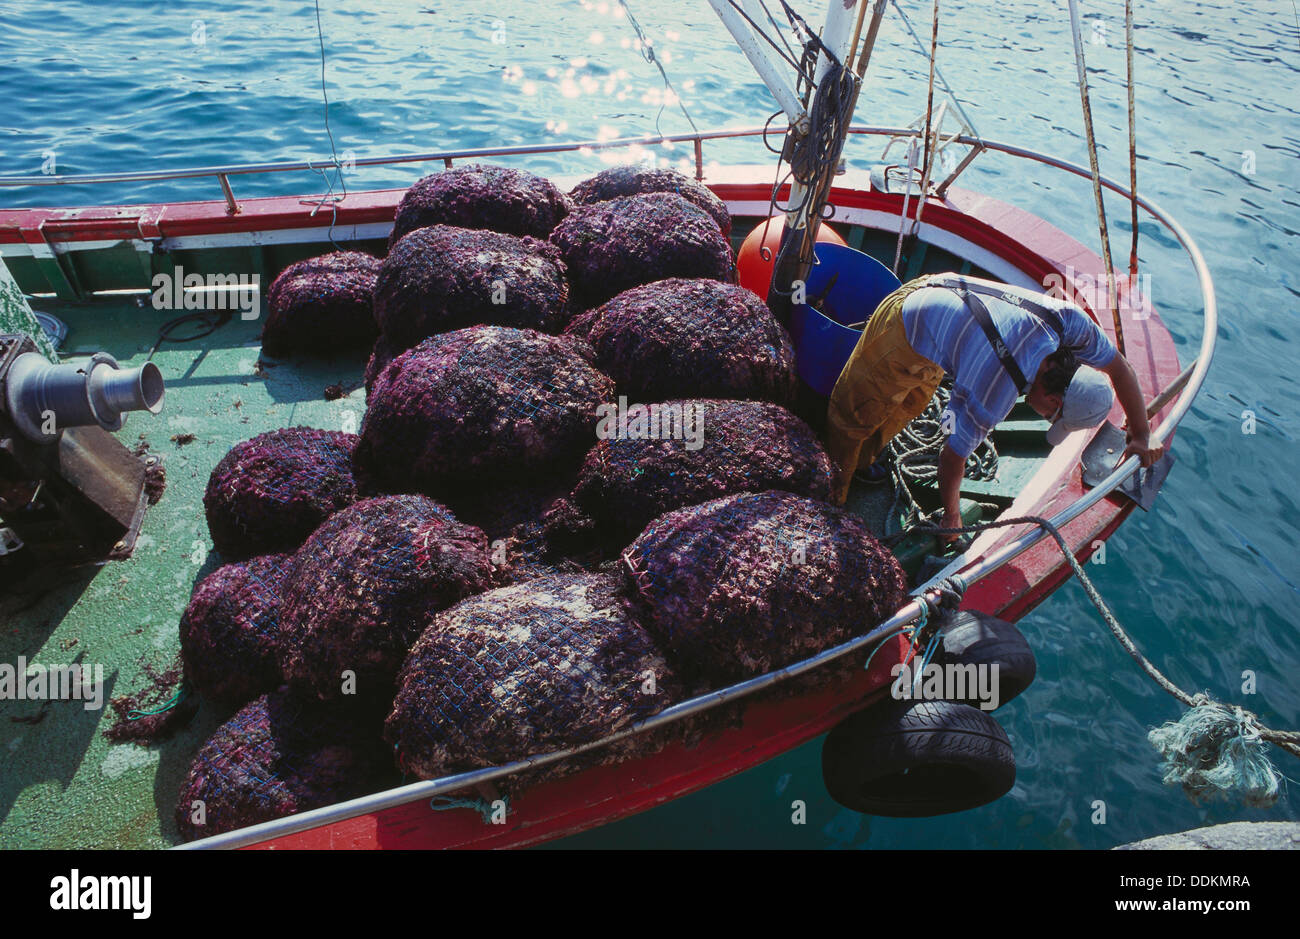 Il Nord Atlantico. Asturias. Spagna. La raccolta di alghe rosse per estrarre agar agar (Gelidium sesquipedale) Foto Stock